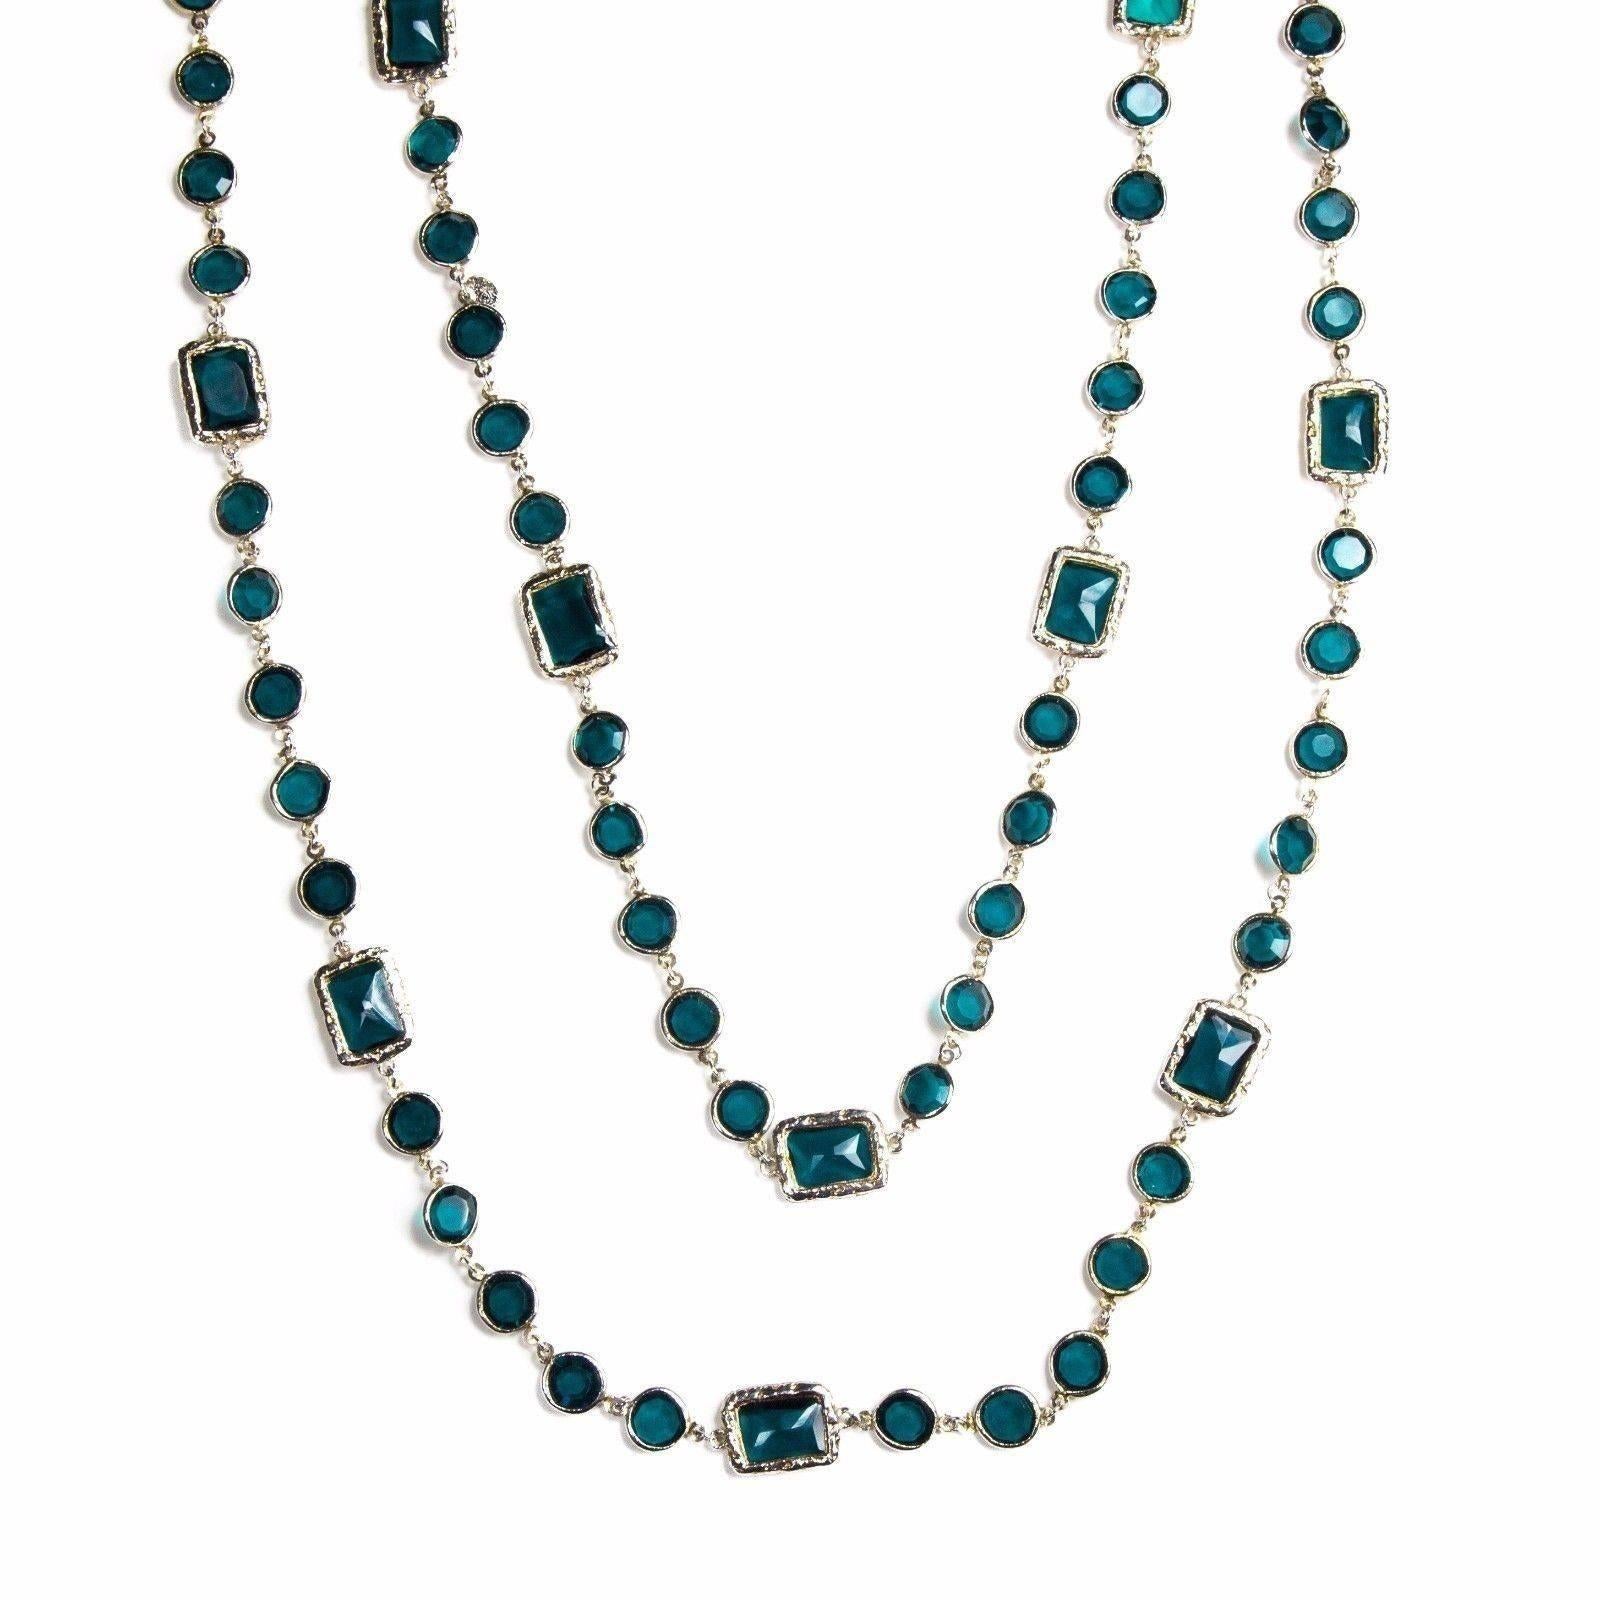 Women's or Men's Chanel Pearl Chicklet Necklace Teal Glass Gripoix Glass Charm Sautoir Vintage